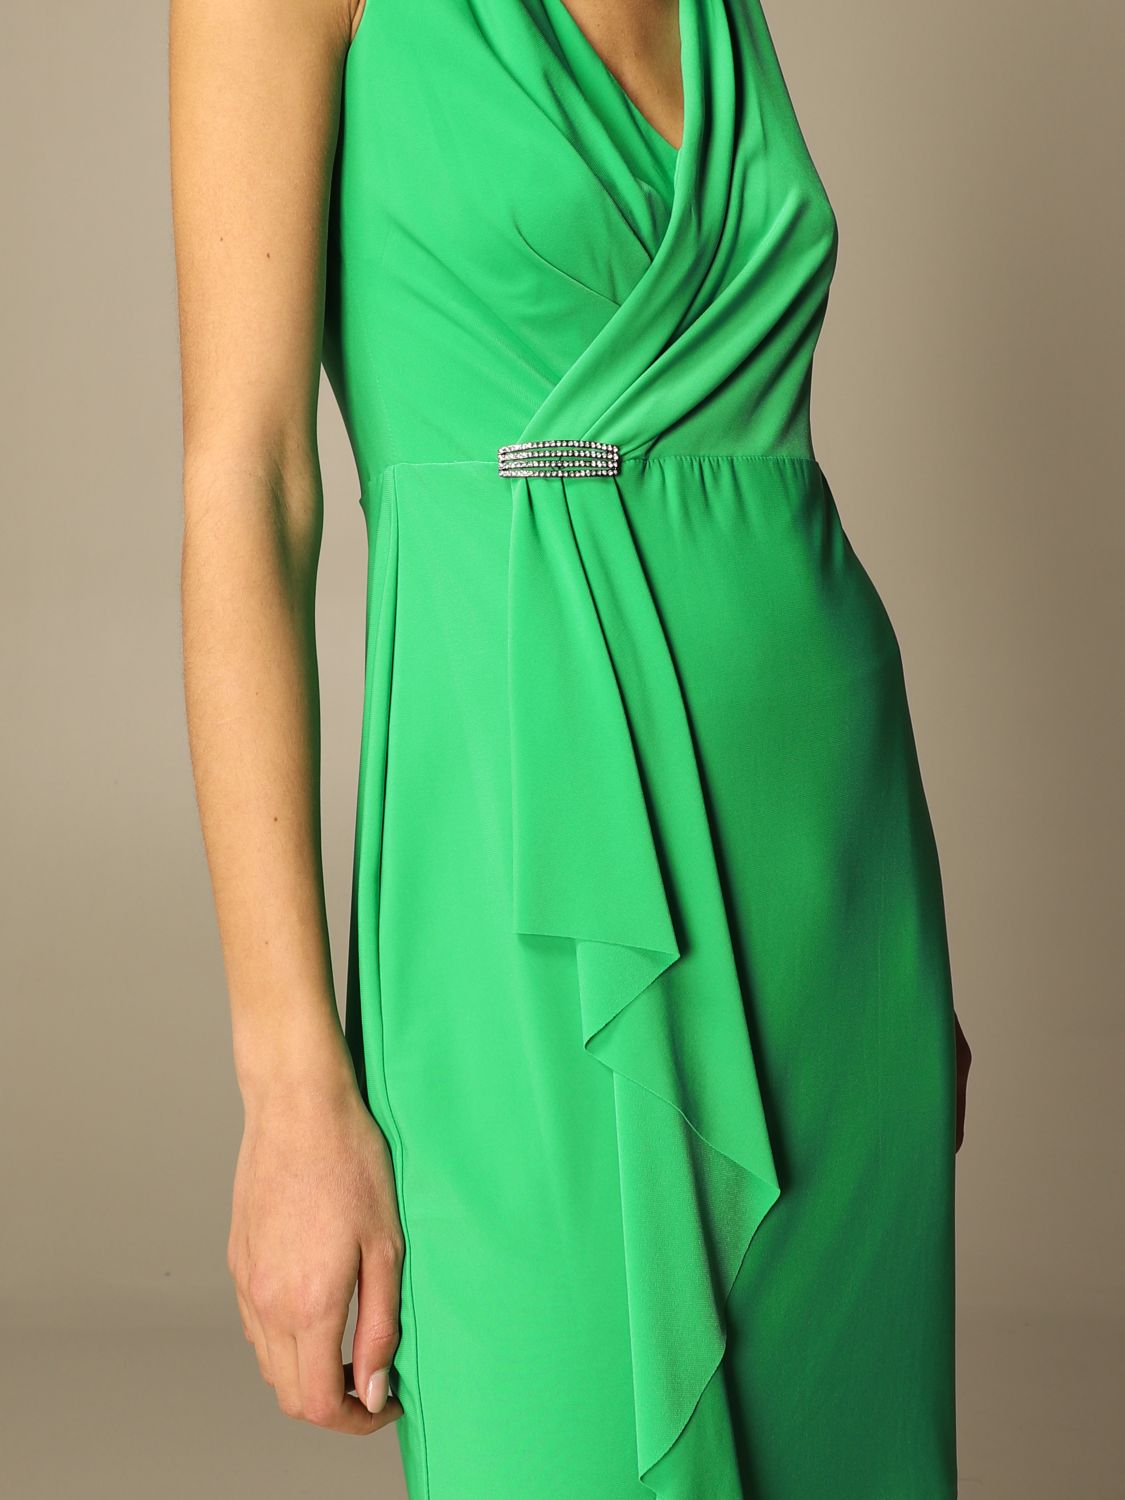 Lauren Ralph Lauren Outlet: Dress v ...